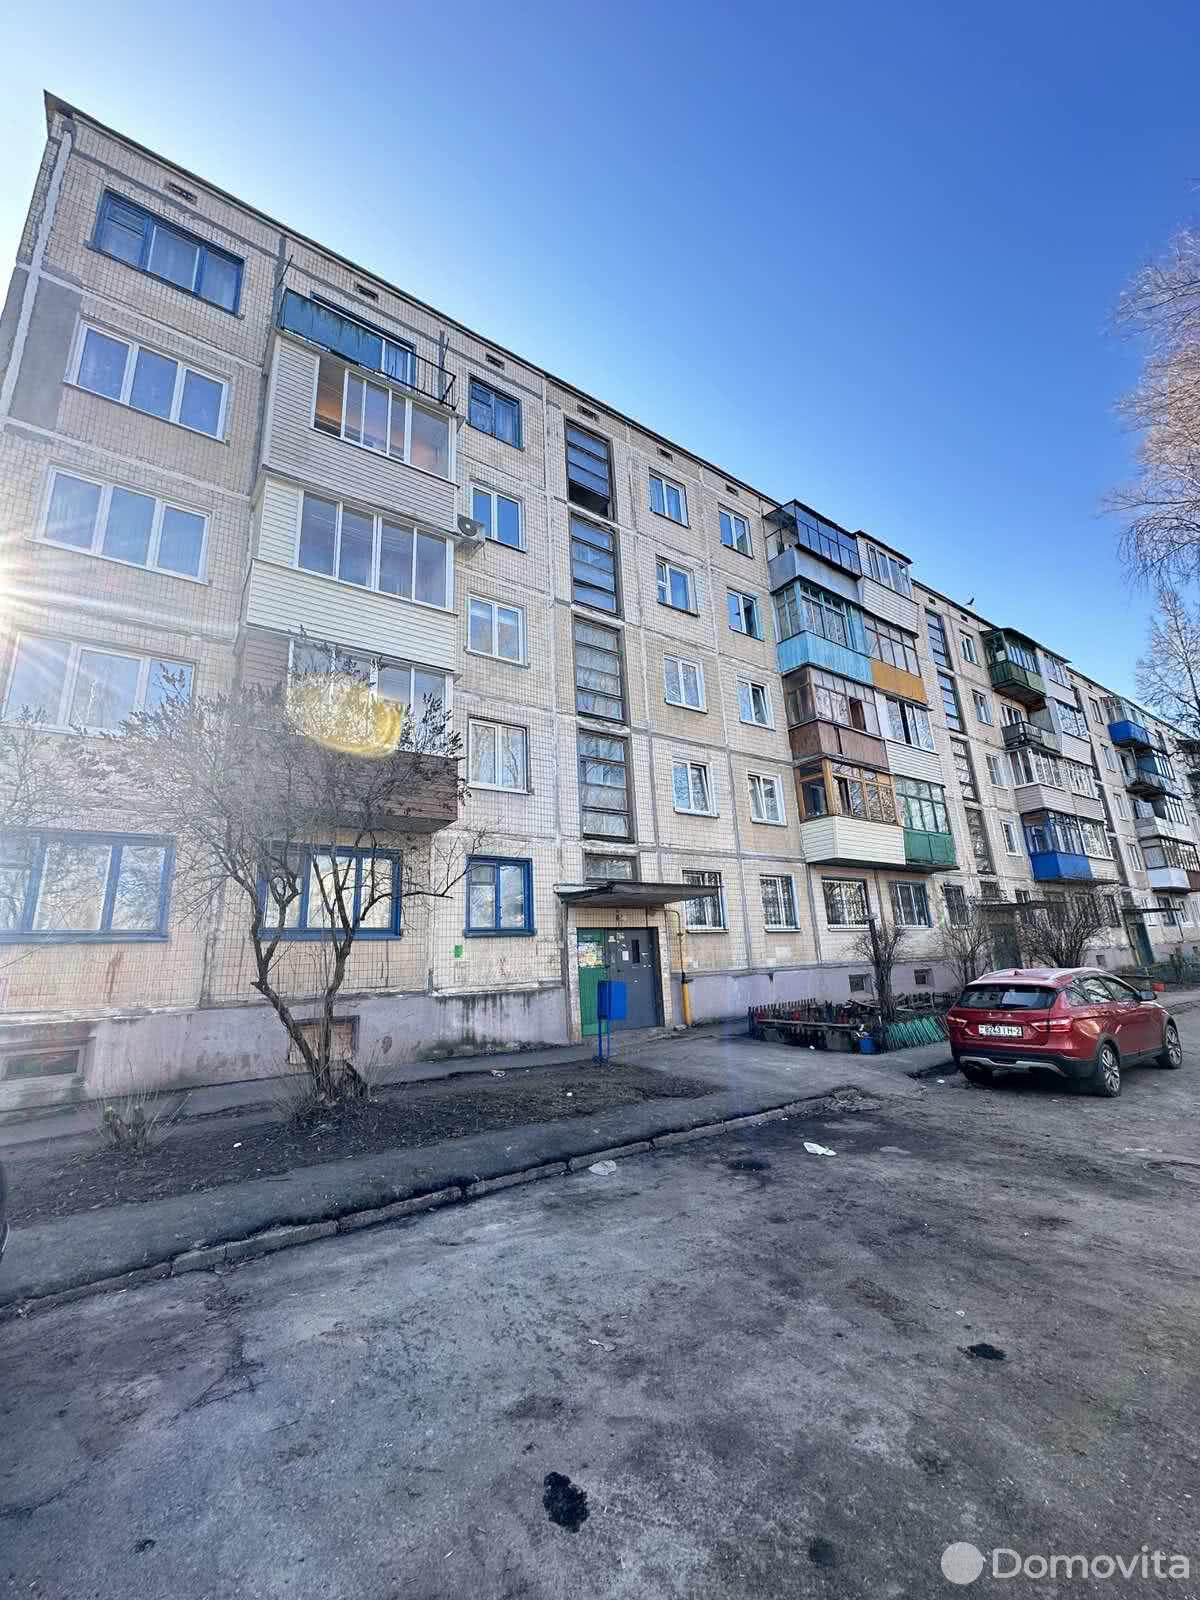 квартира, Витебск, ул. Вострецова, д. 9/2, стоимость продажи 104 448 р.